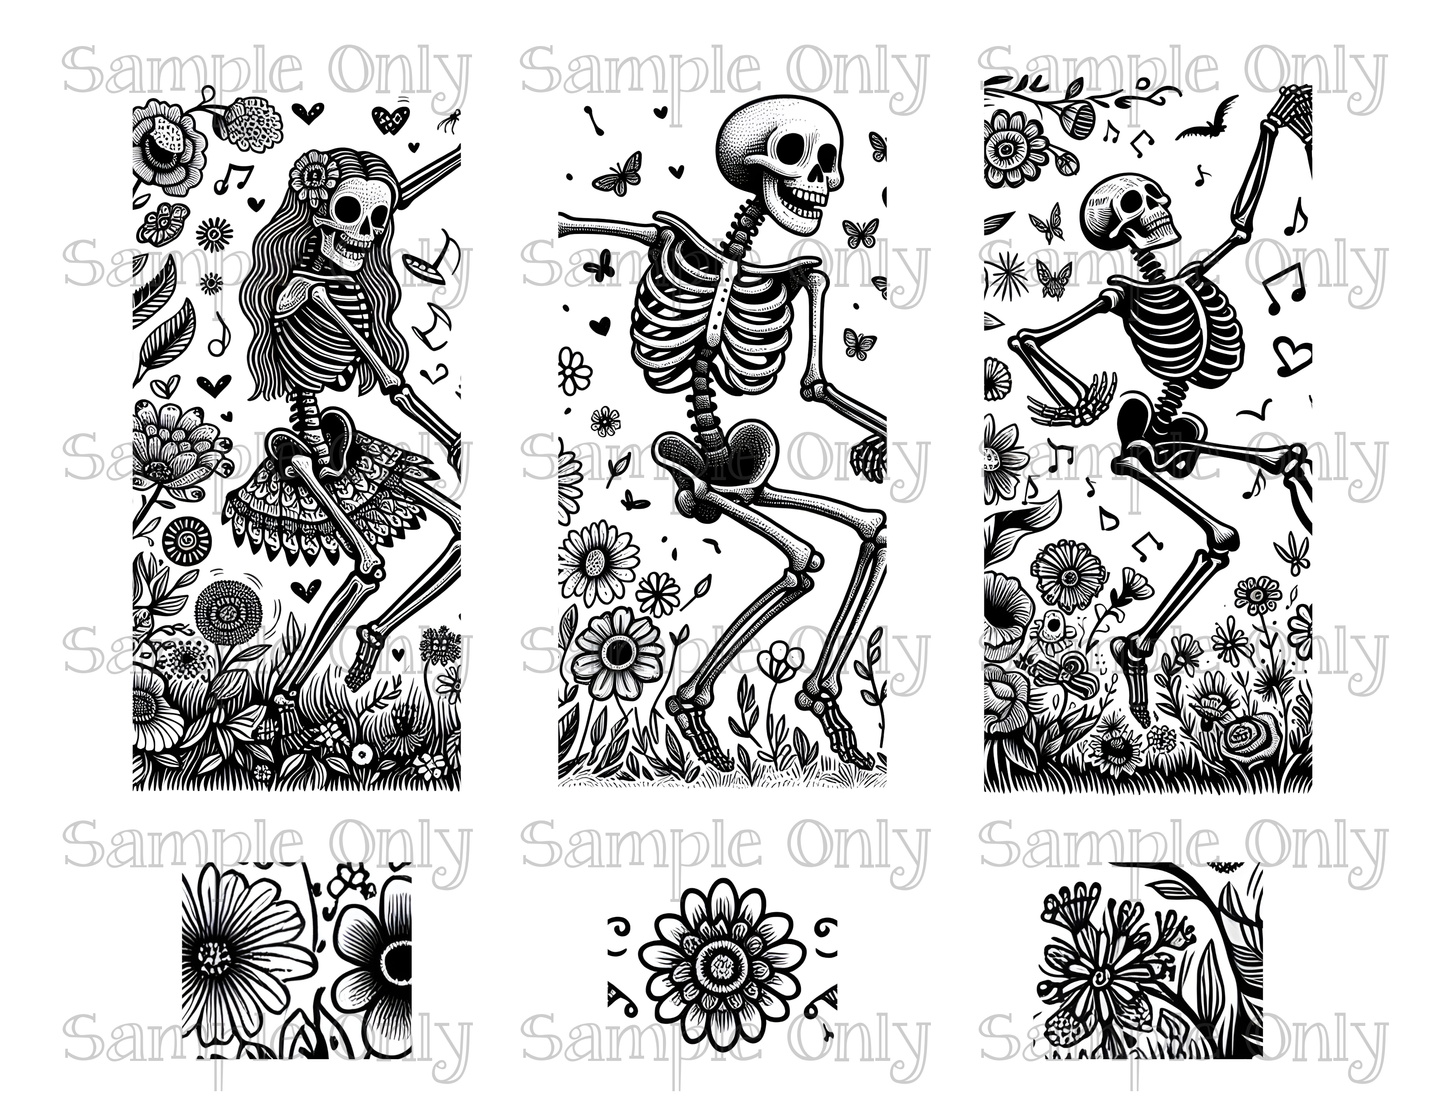 OJC X LLG Dancing Skeletons Image For Polymer Clay Transfer Sheet DIGITAL OR PRINTED